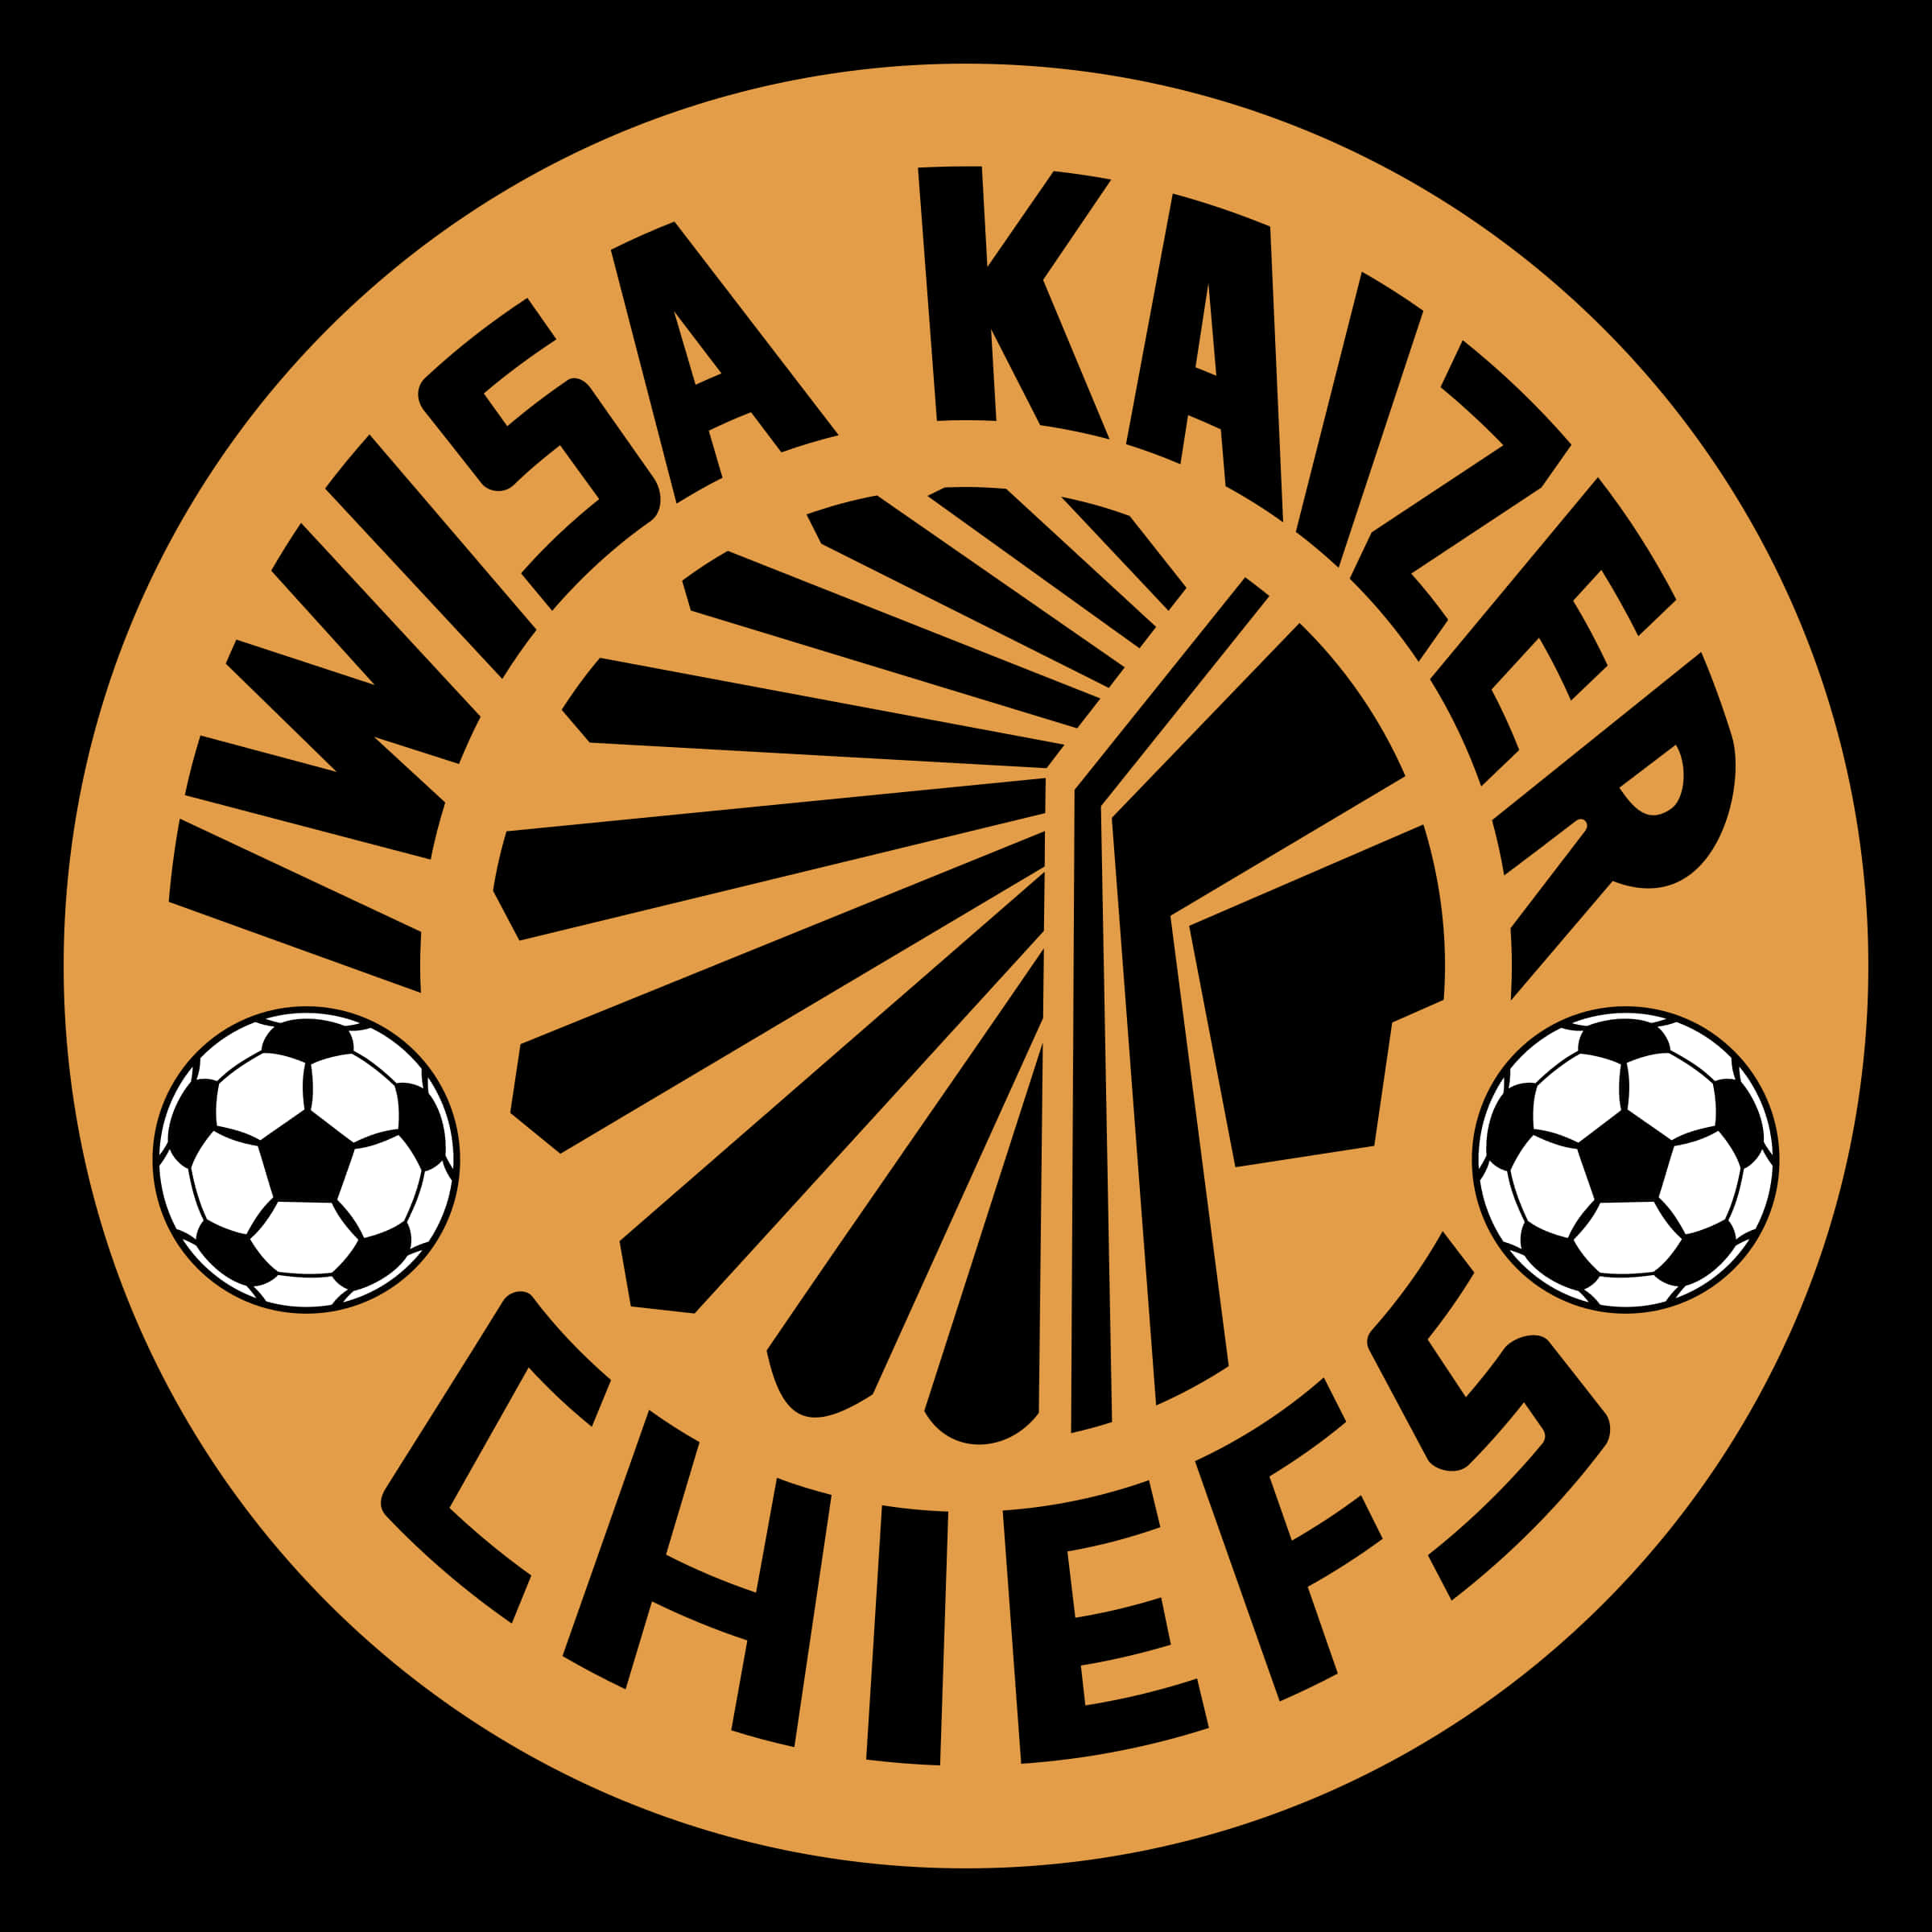 Kaizer Chiefs Logo PNG